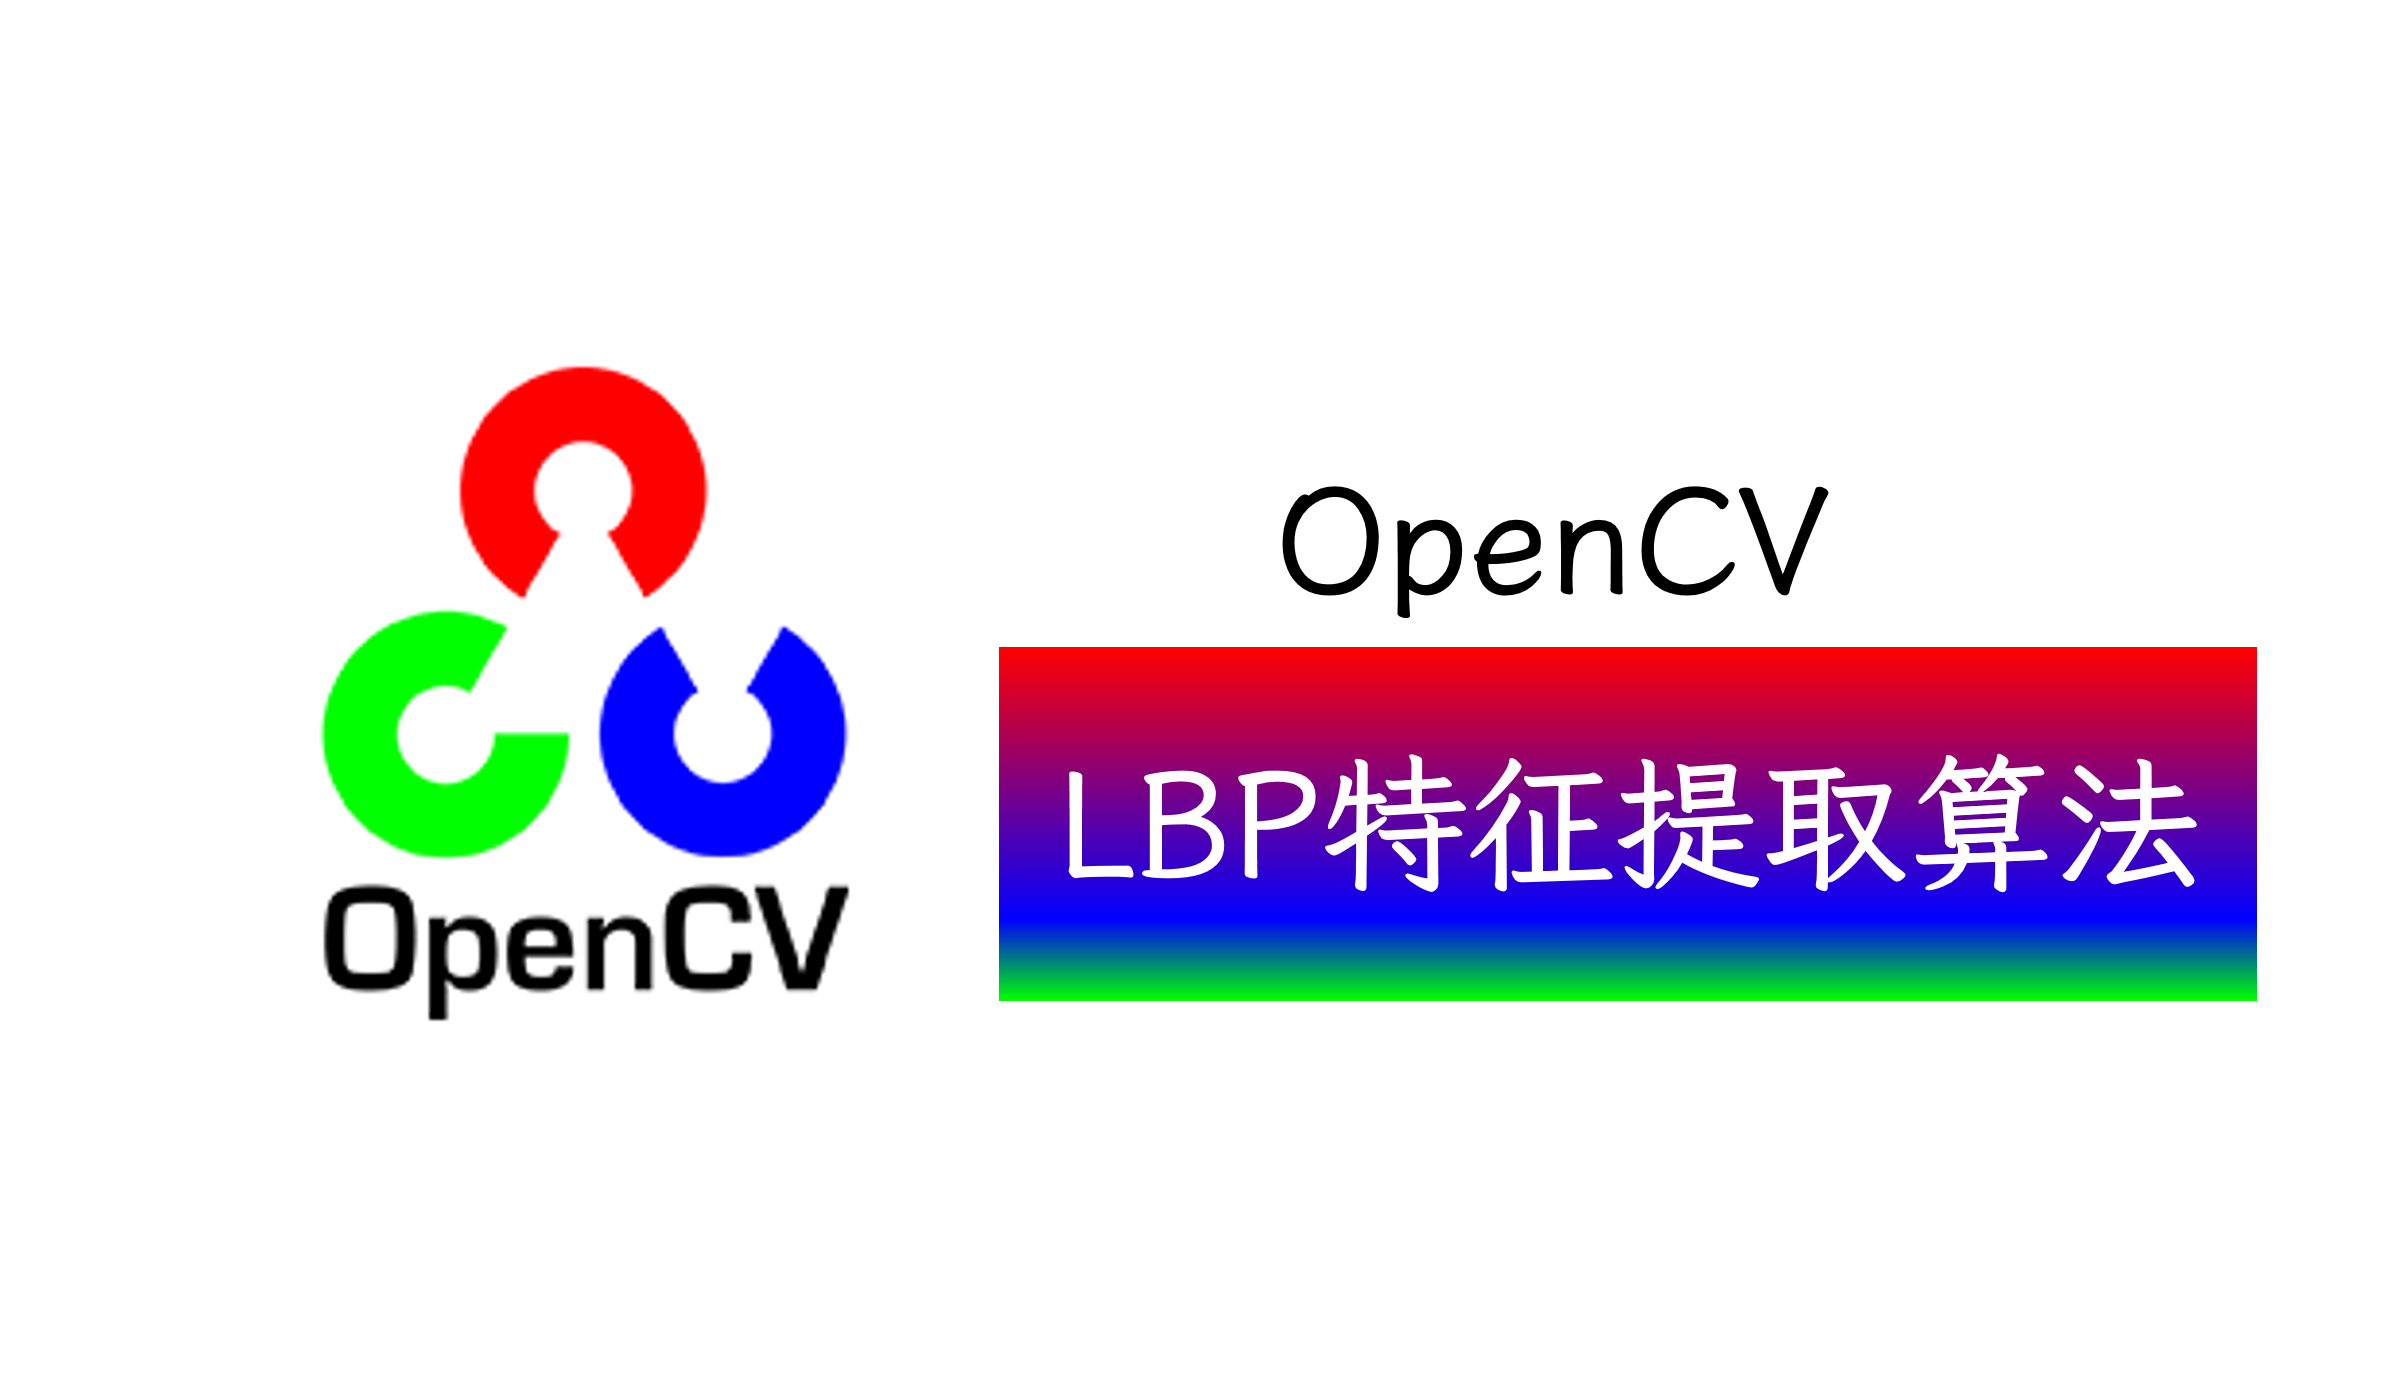 OpenCV-LBP特征提取算法